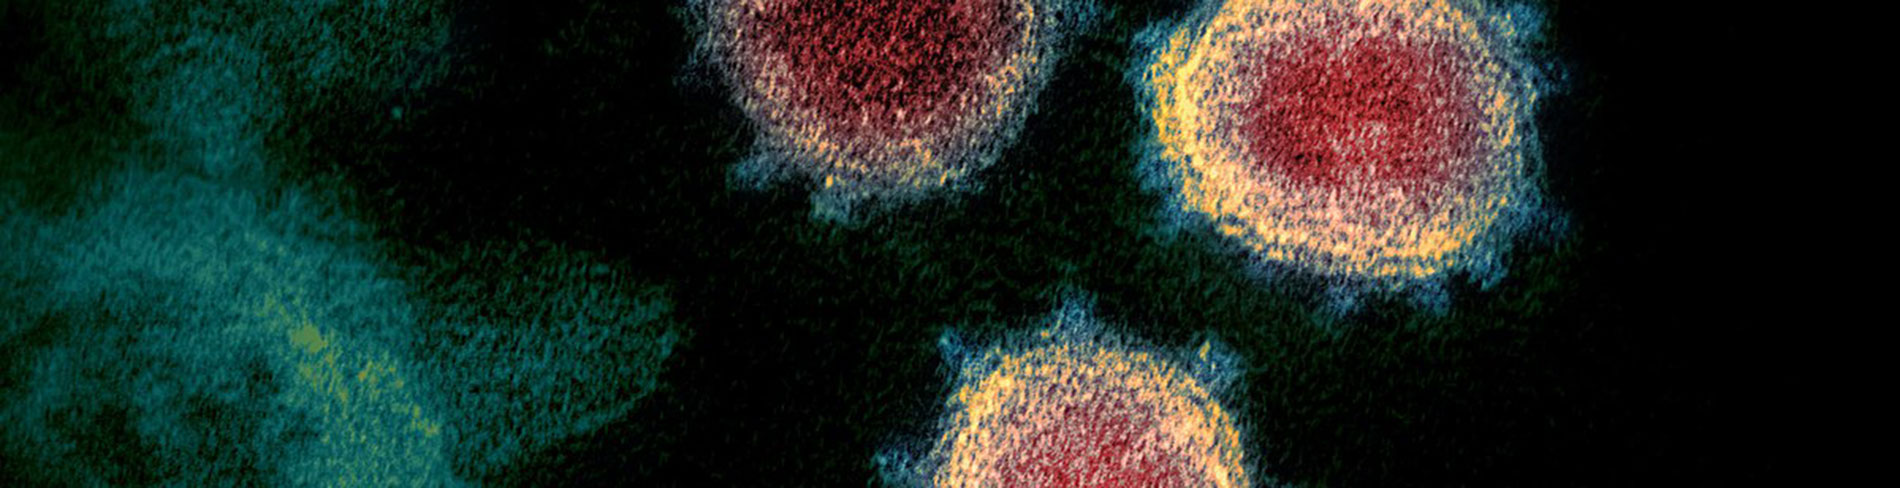 Representation of a microscopic view of the Coronavirus